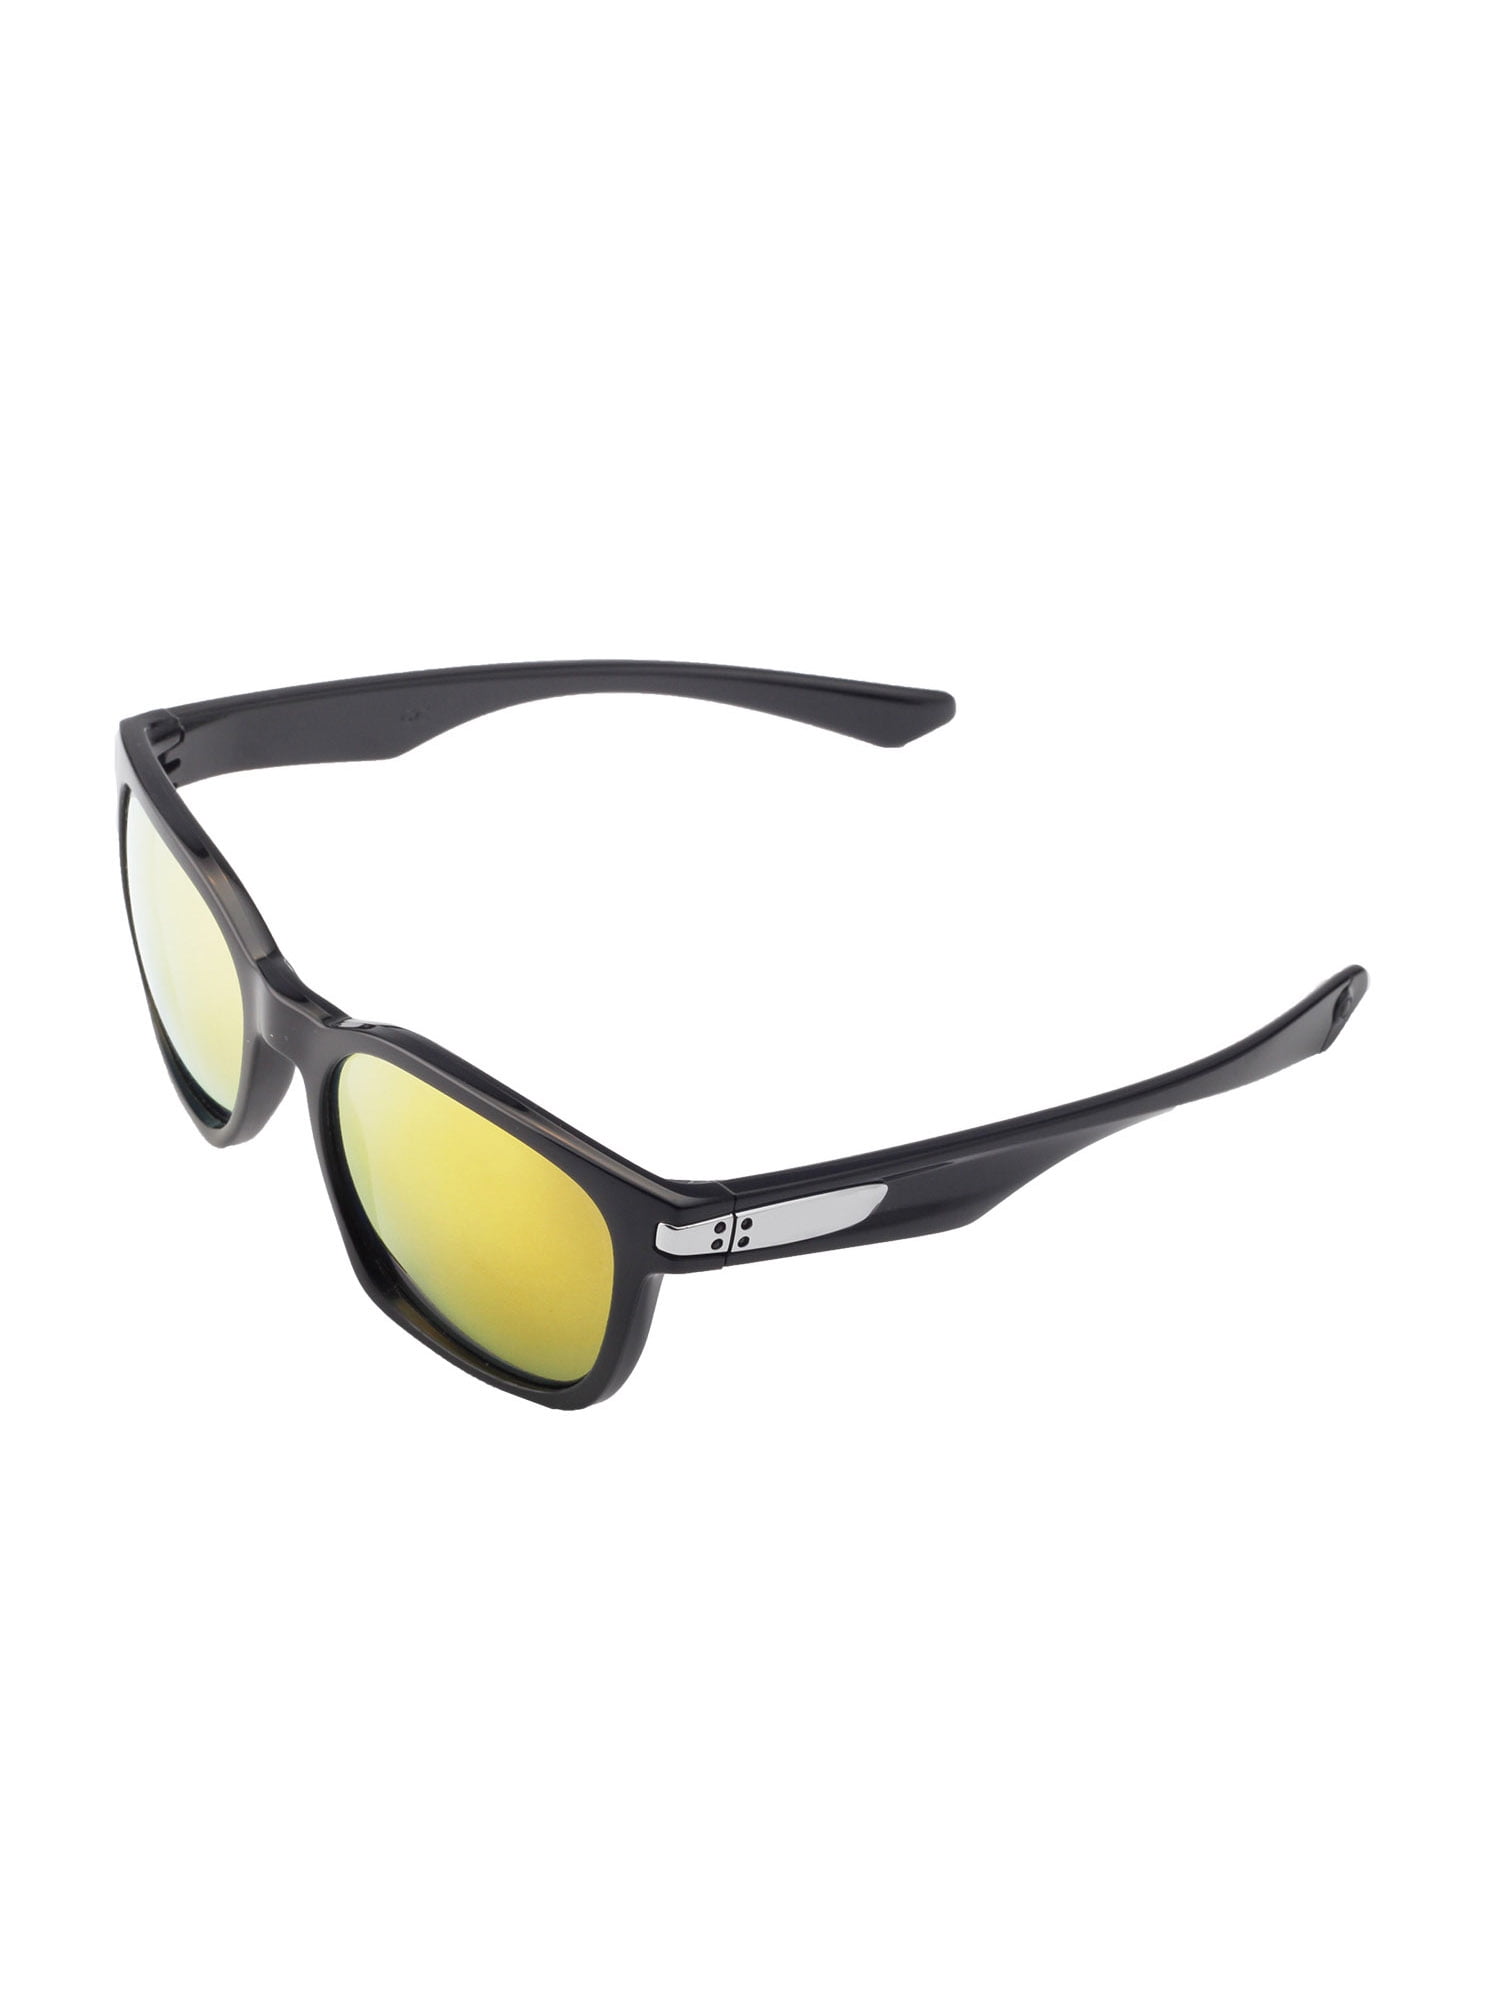 Walleva Gold Polarized Replacement Lenses Oakley Garage Rock Sunglasses - Walmart.com